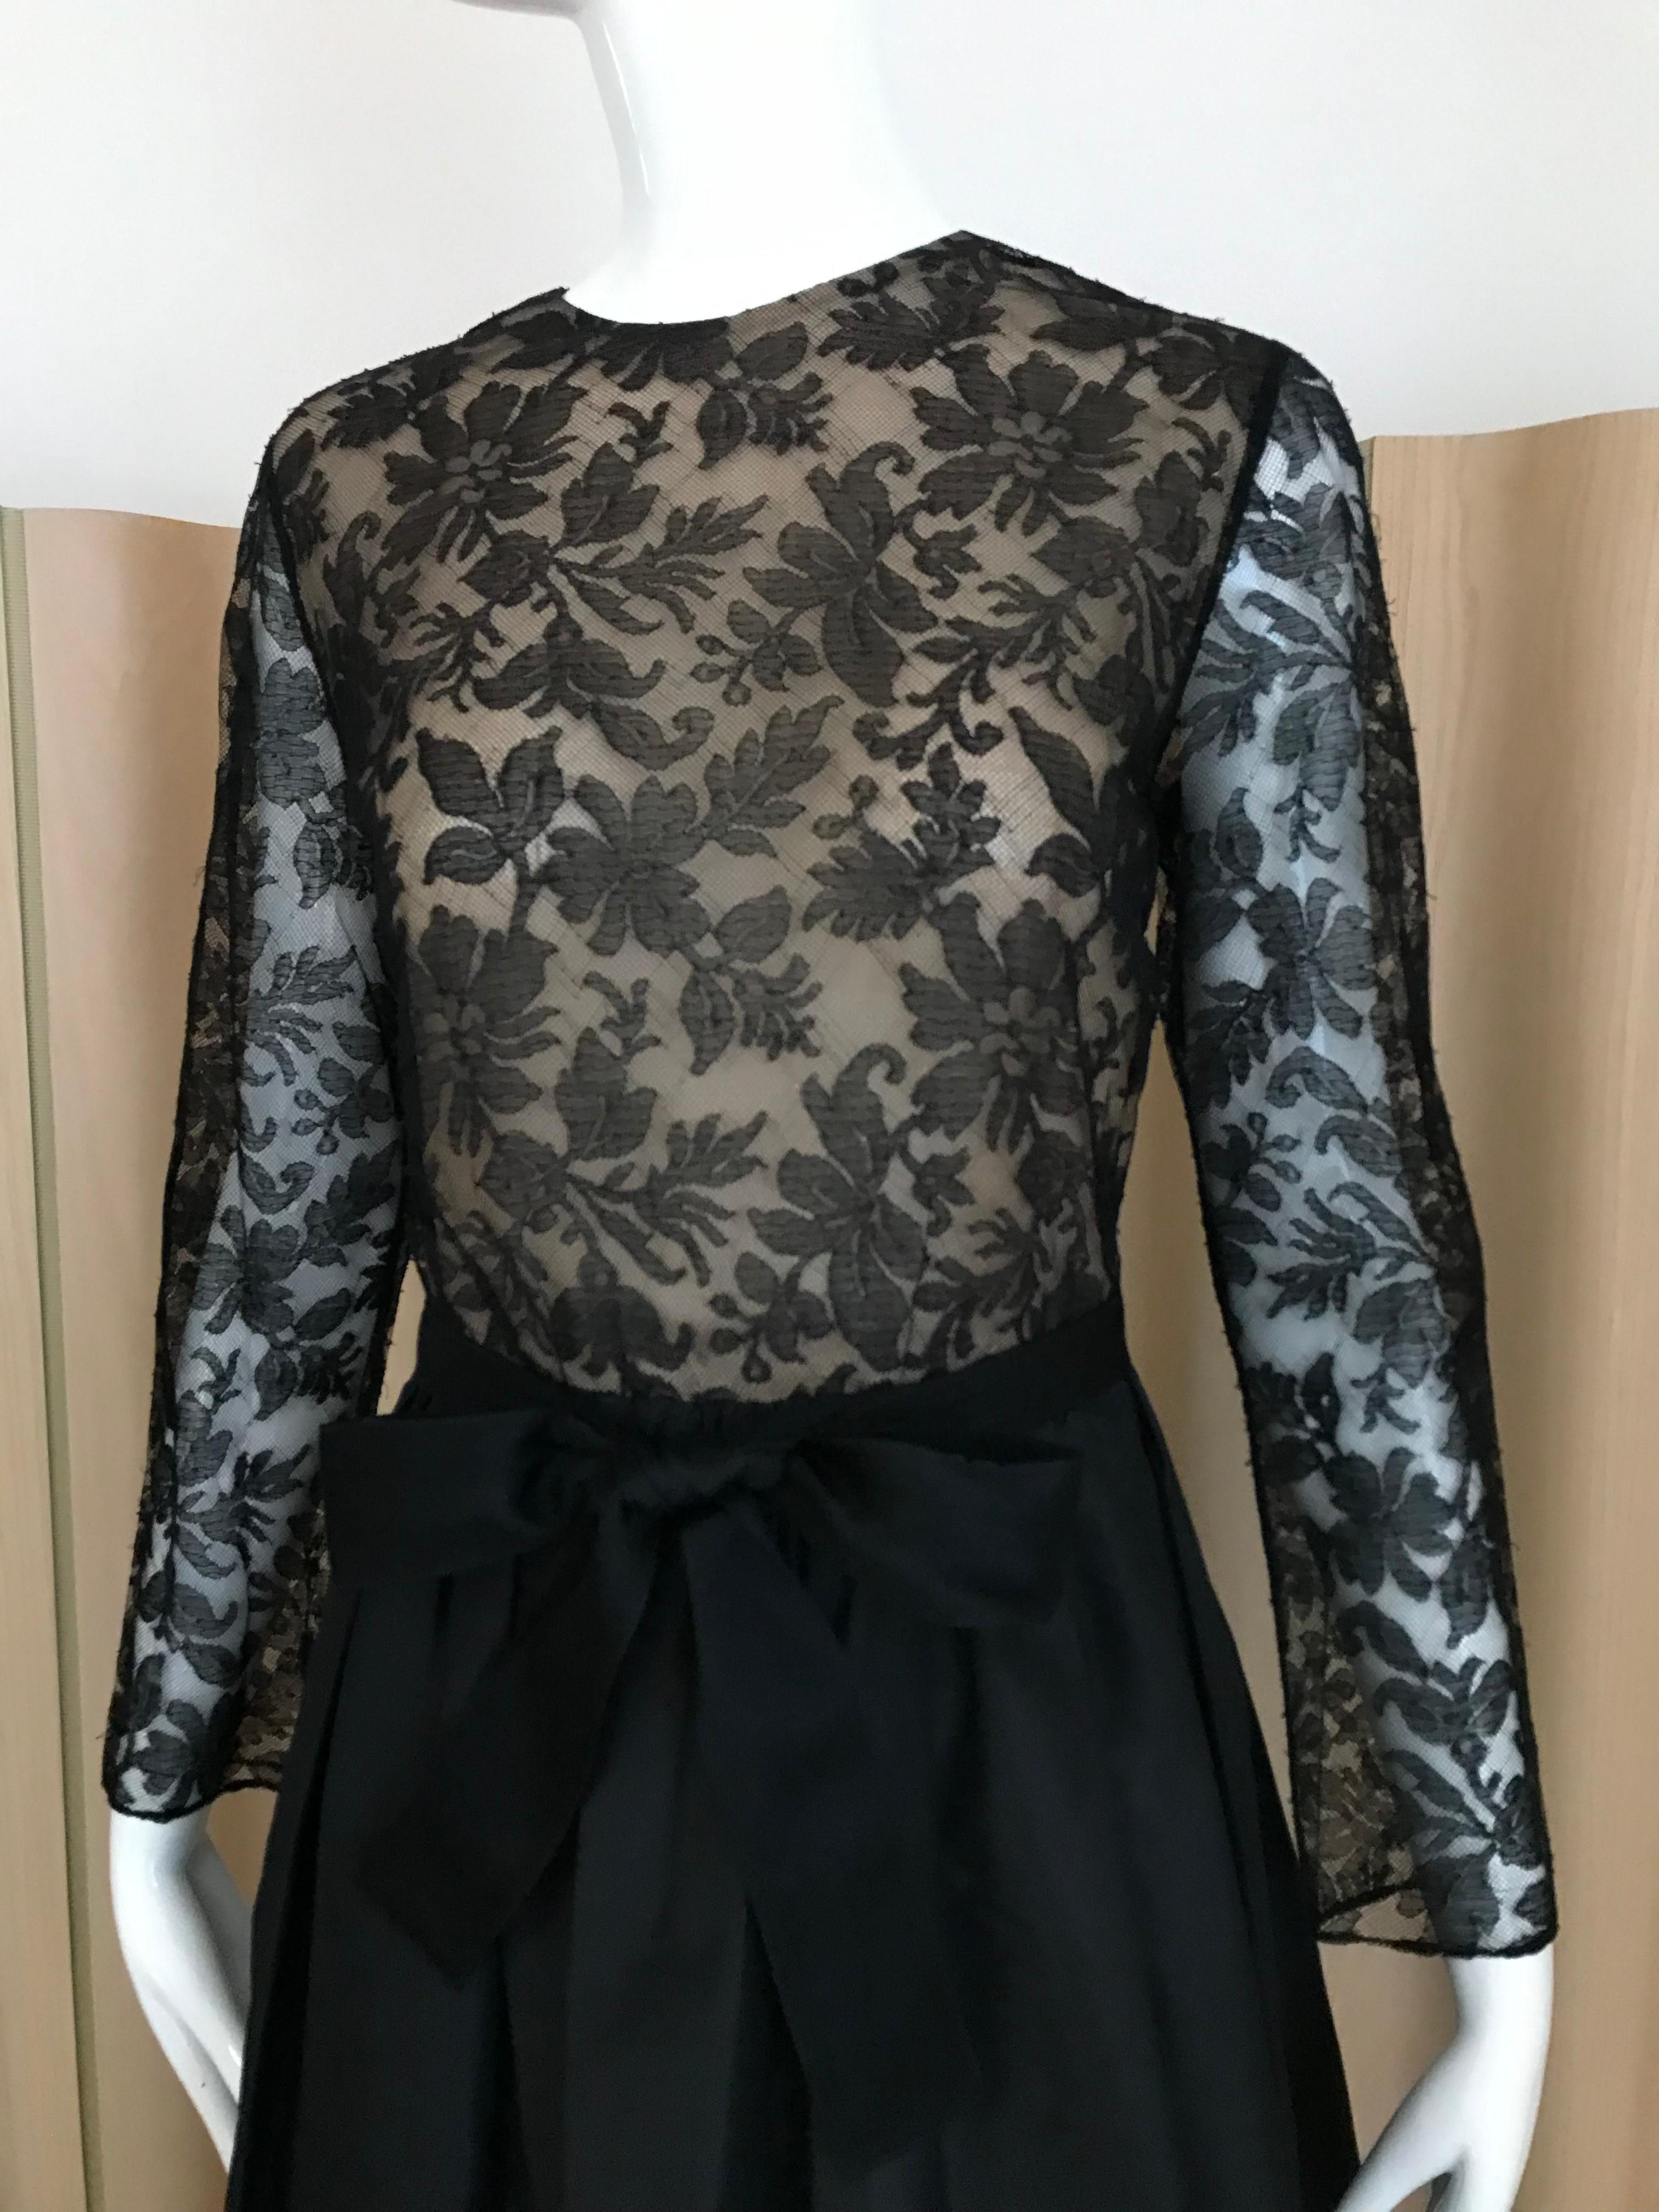 Vintage 1970s Bill Blass Black Lace long sleeve dress with silk taffeta skirt and black ribbon sash.
Perfect for black tie event.
Size: Medium
Bust: 36 inches/ waist: 28 inches/ Dress length: 55inchess / sleeve : 22 inches